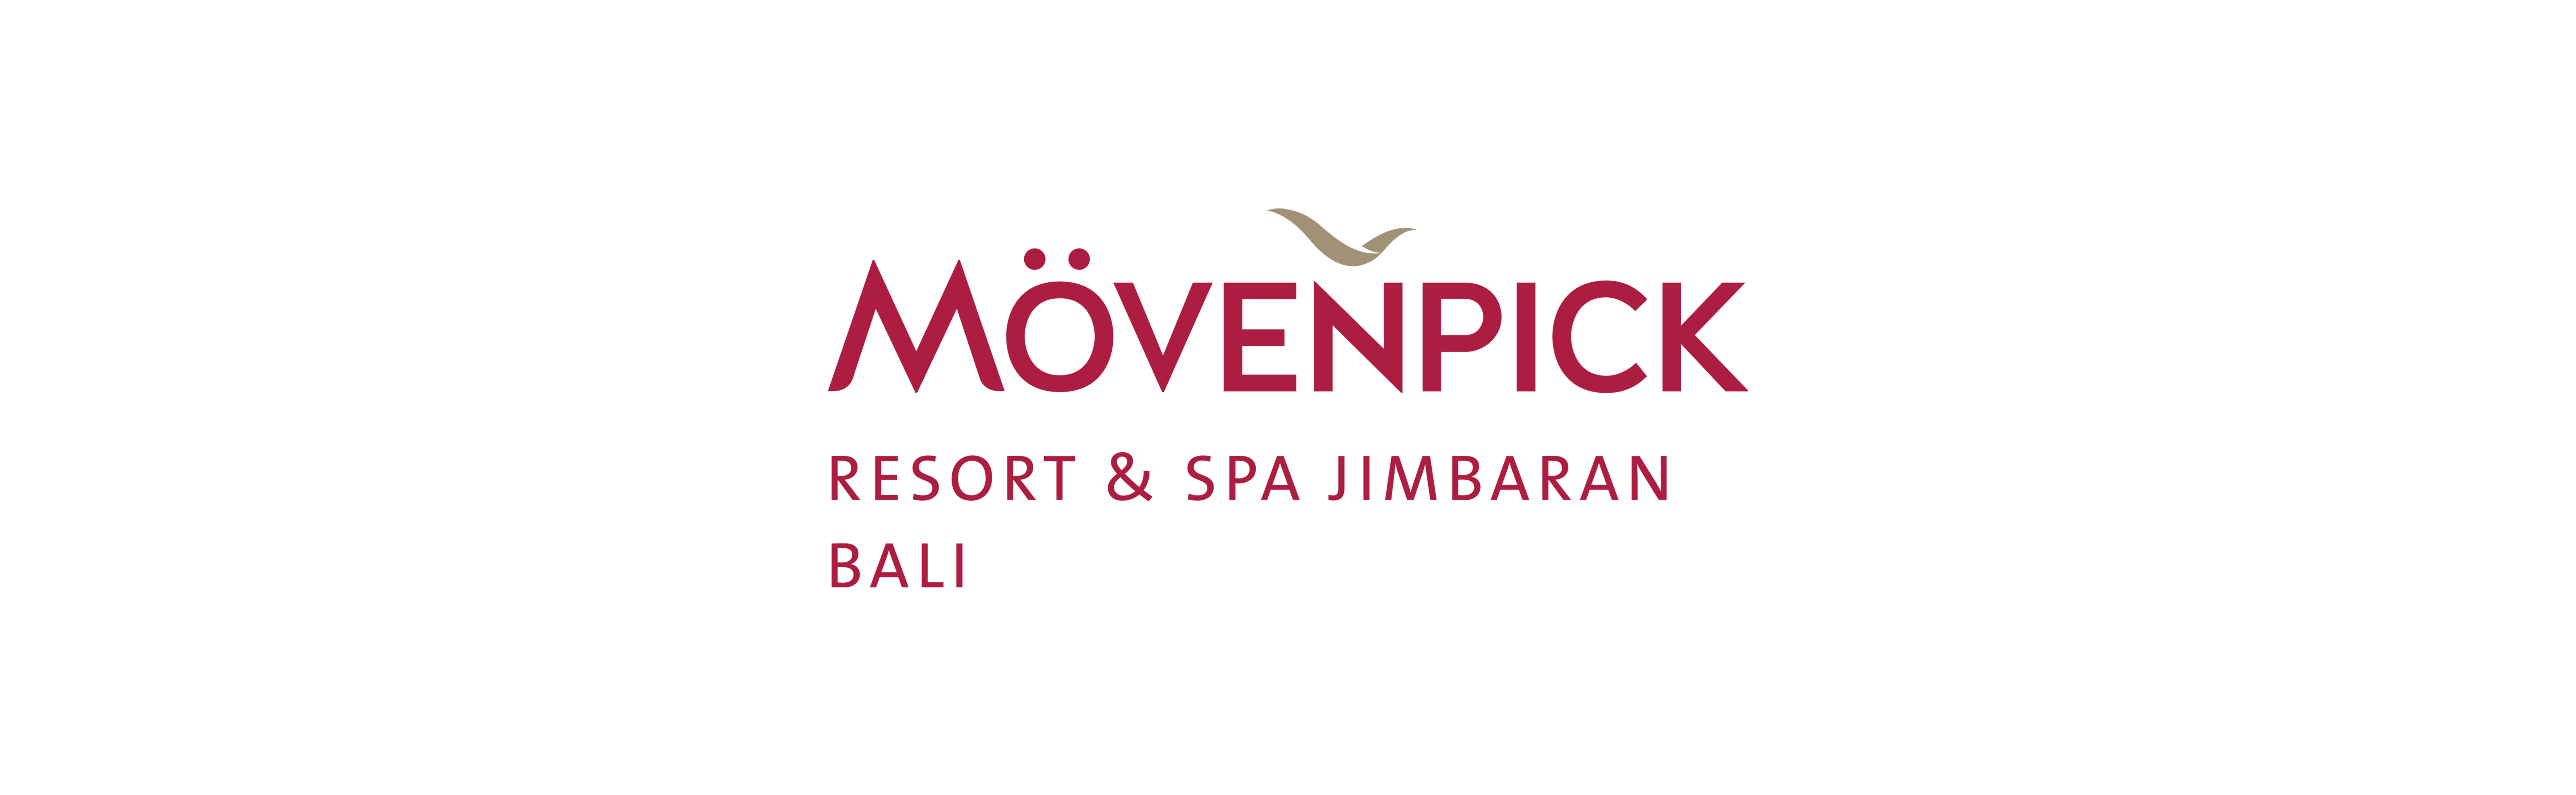 Standards for Movenpick Resort & Spa Jimbaran Bali